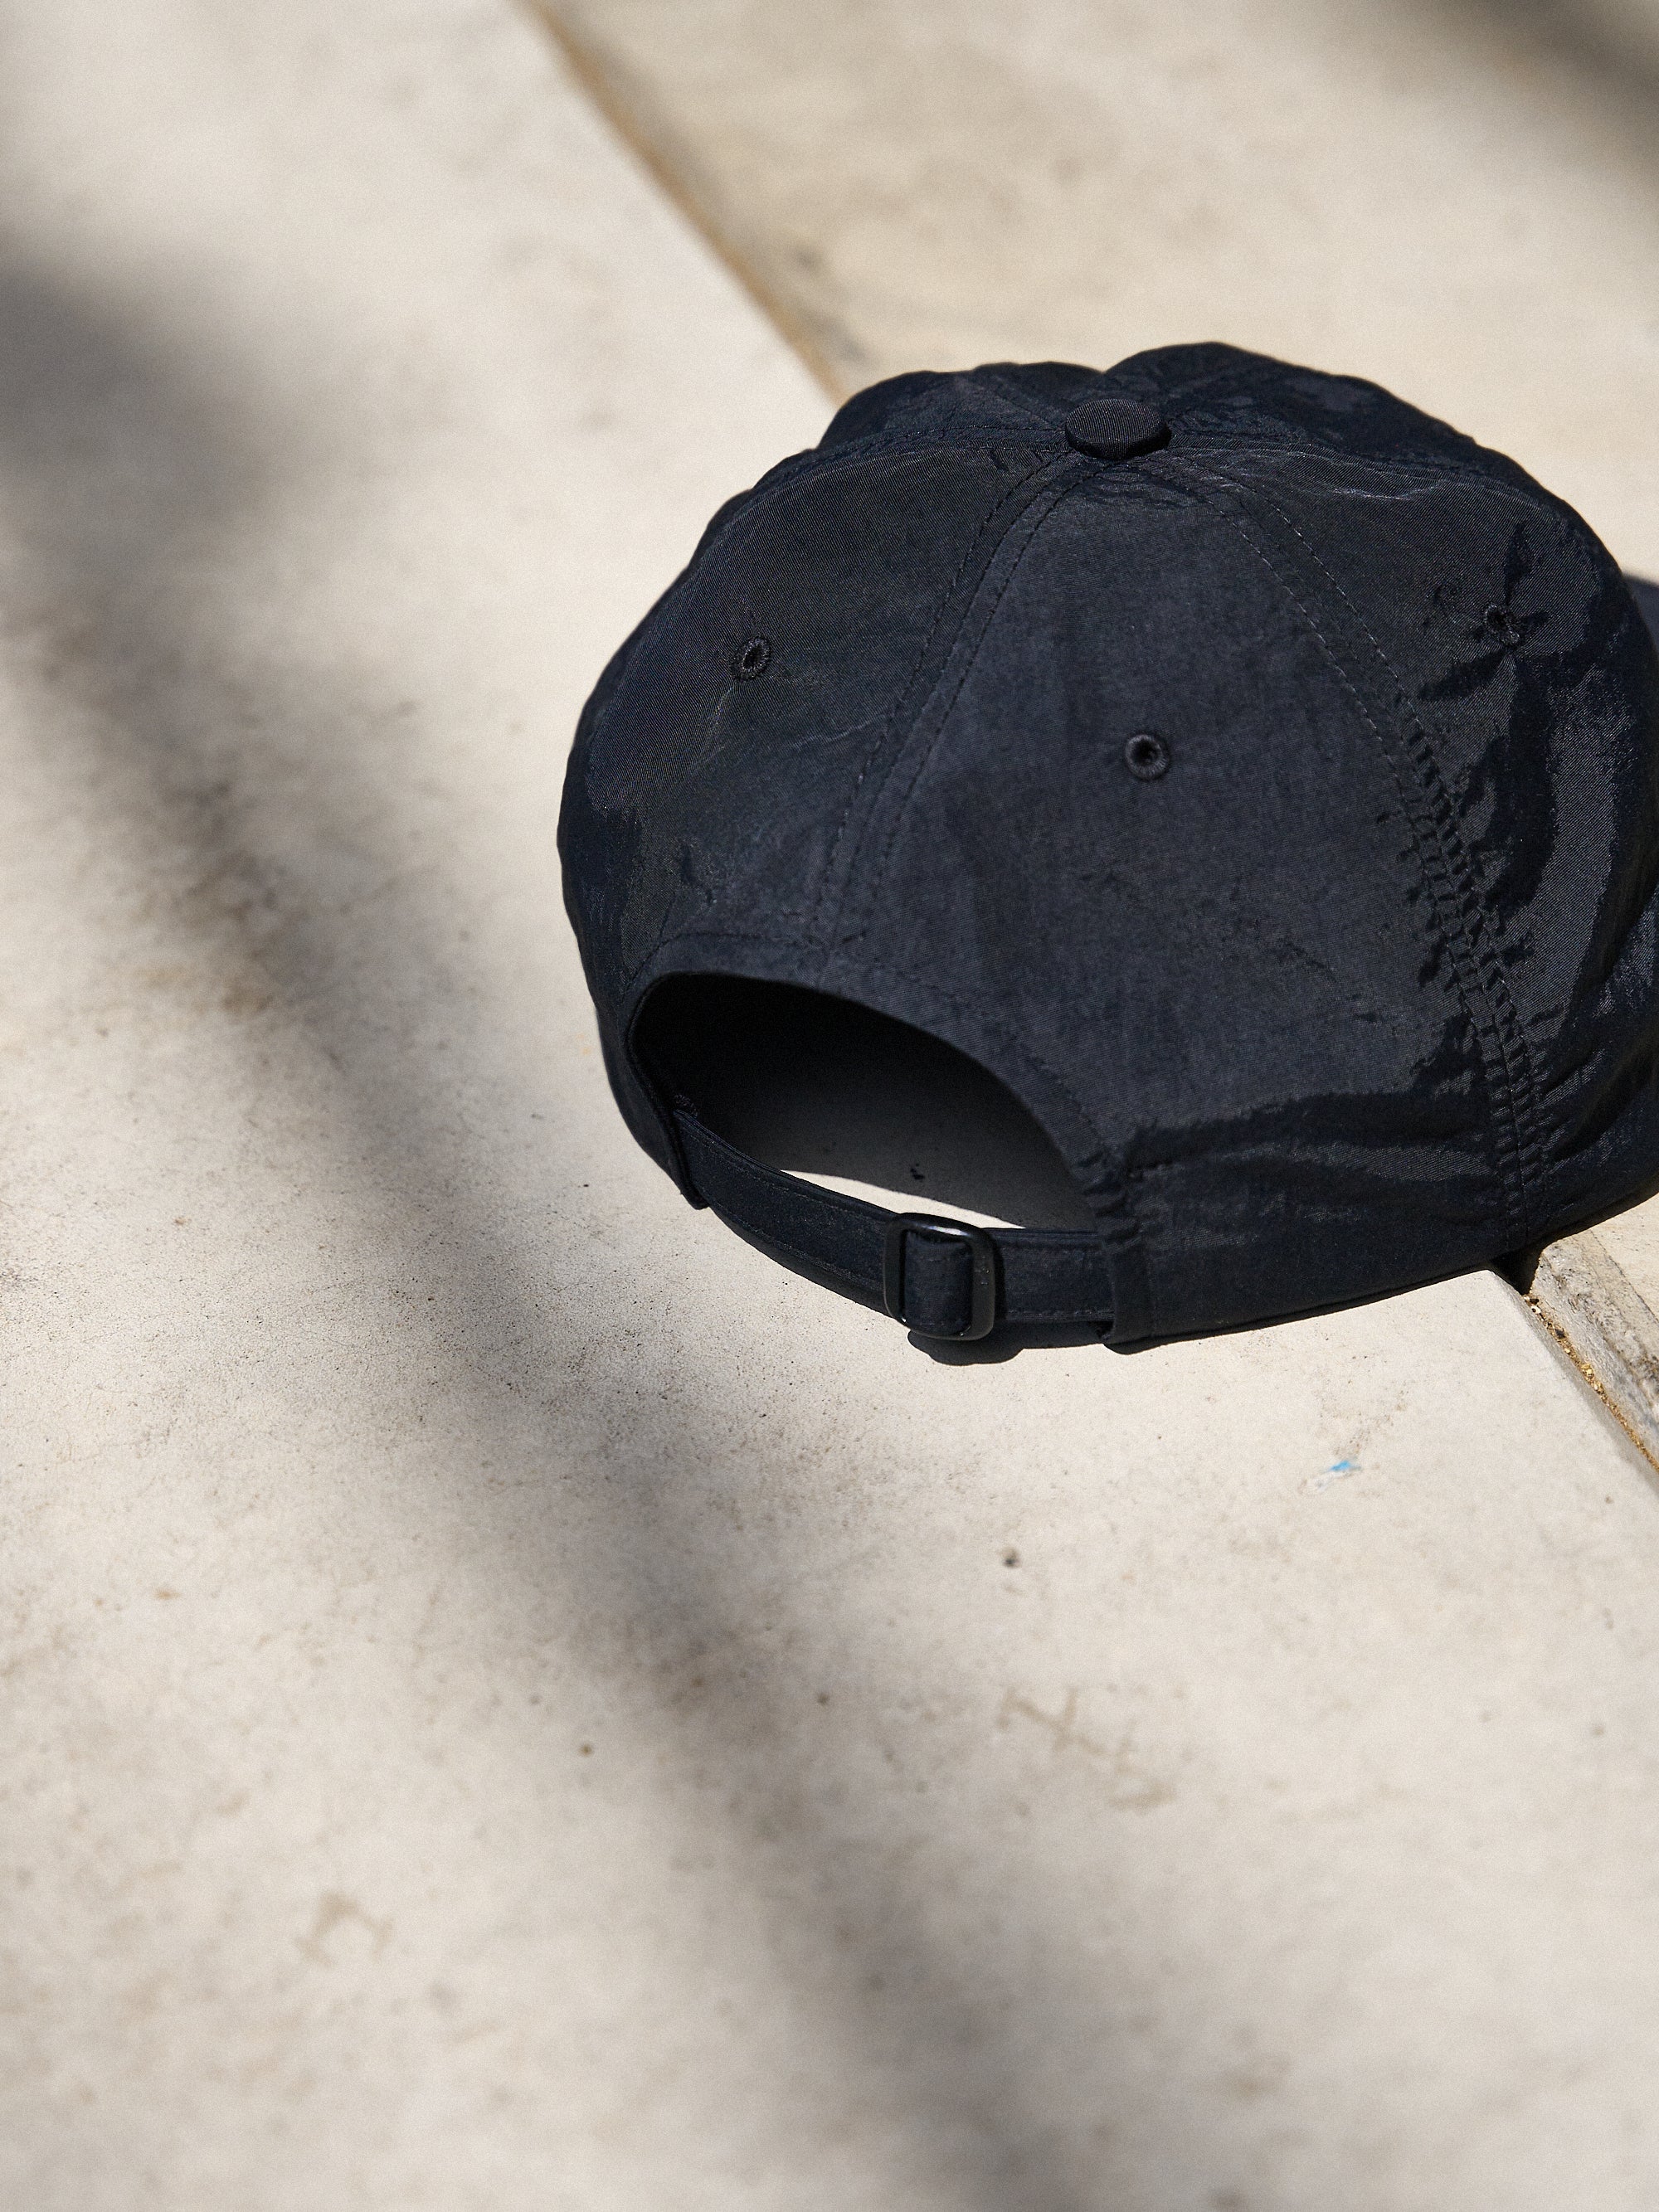 GARBAGE SOFT BRIM 6 PANEL CAP (4:33) - 帽子